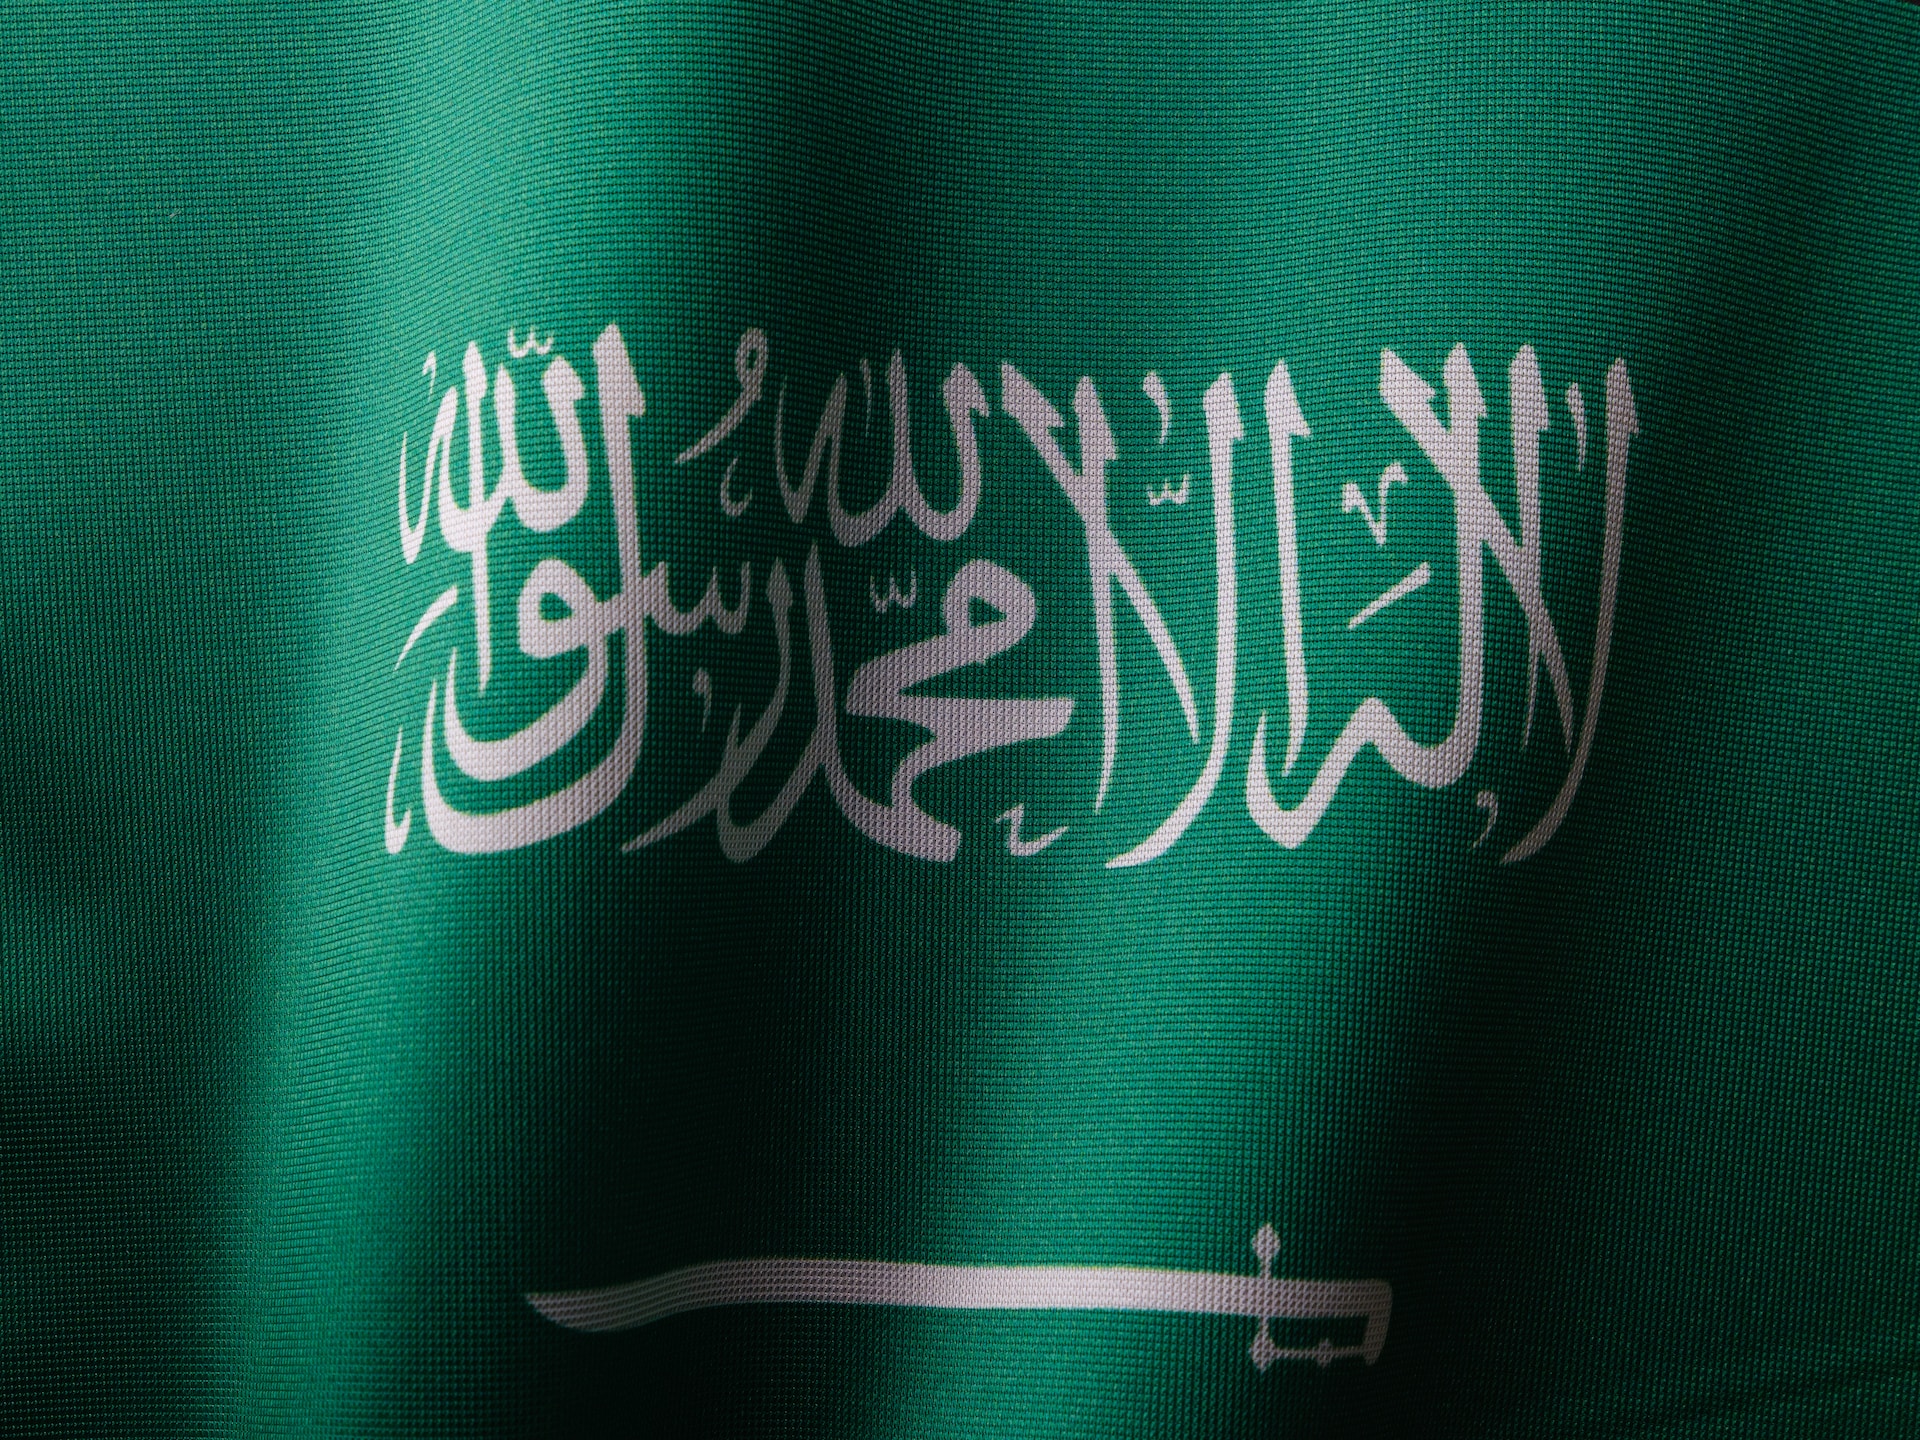 Arab Saudi Akan Gelar Eksekusi Mati Terhadap 3 Pria Suku Huwaiti, PBB Menentang Keras: Ini Pembunuhan yang Disengaja!